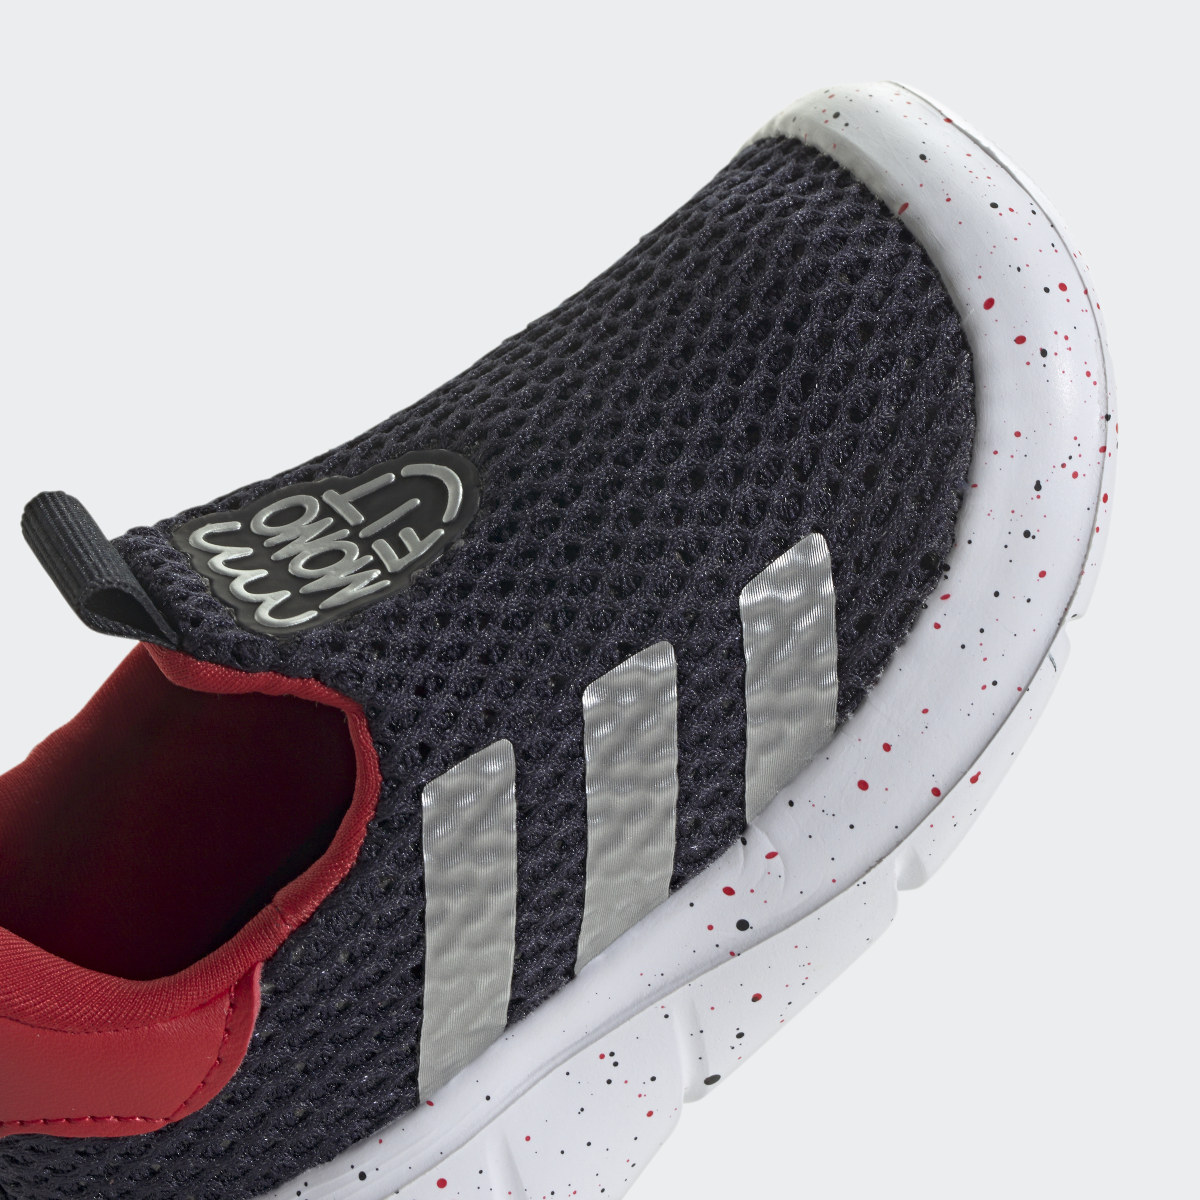 Adidas MONOFIT Trainer Lifestyle Slip-on Shoes. 9